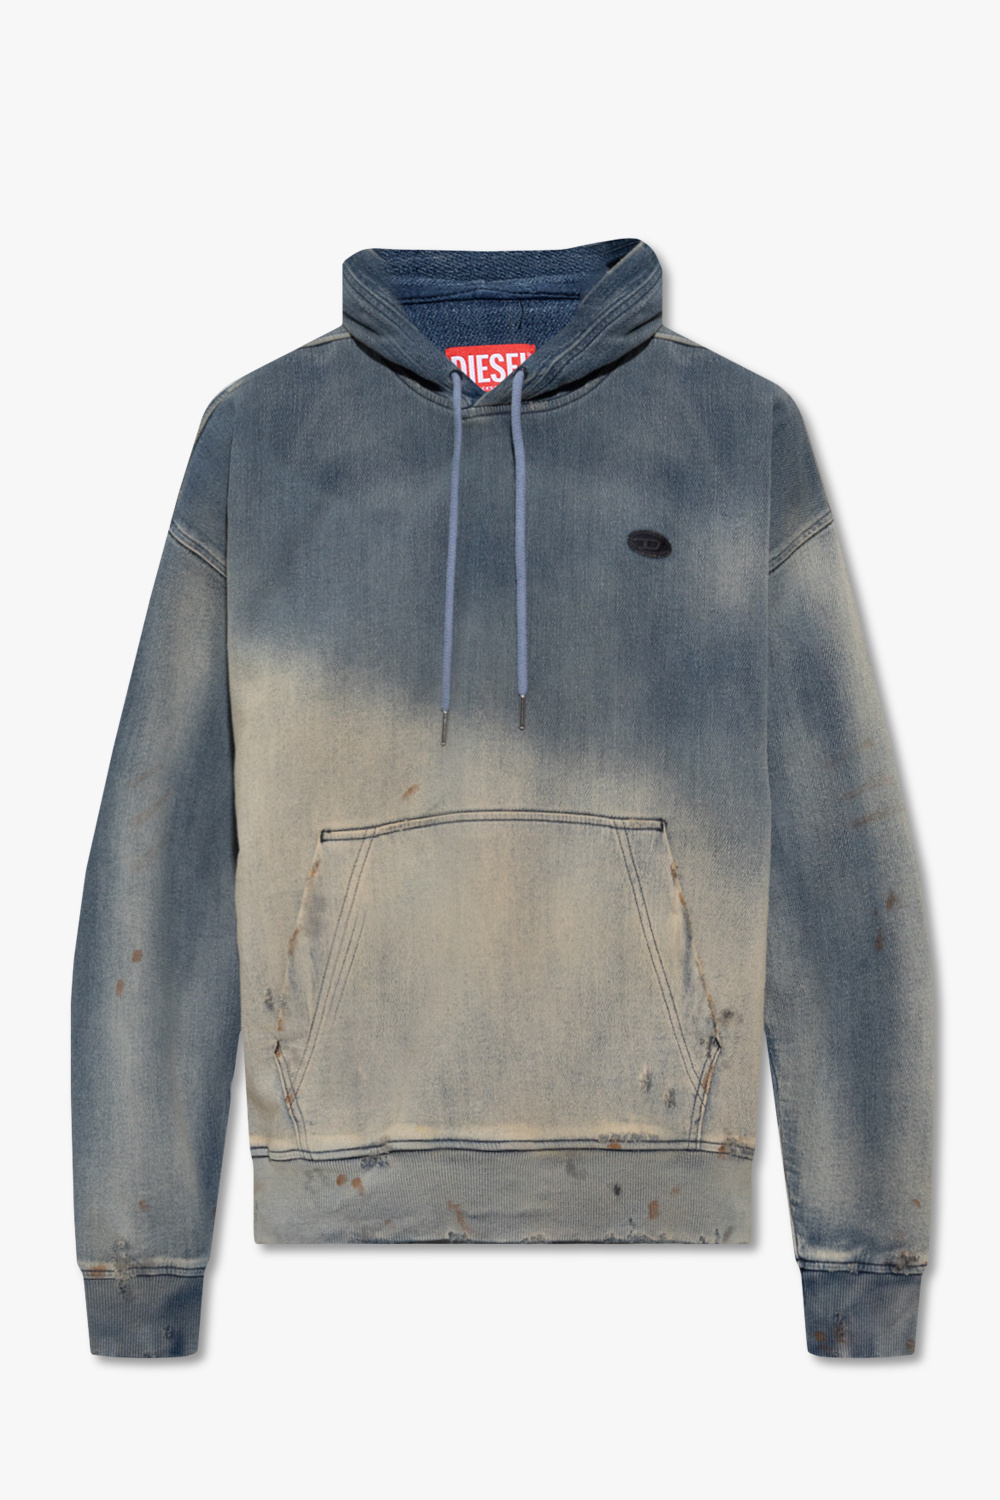 UM - NE' denim hoodie Diesel - alpha industries basic os heavy t shirt dark  olive - StclaircomoShops GB - Blue 'D - RIB